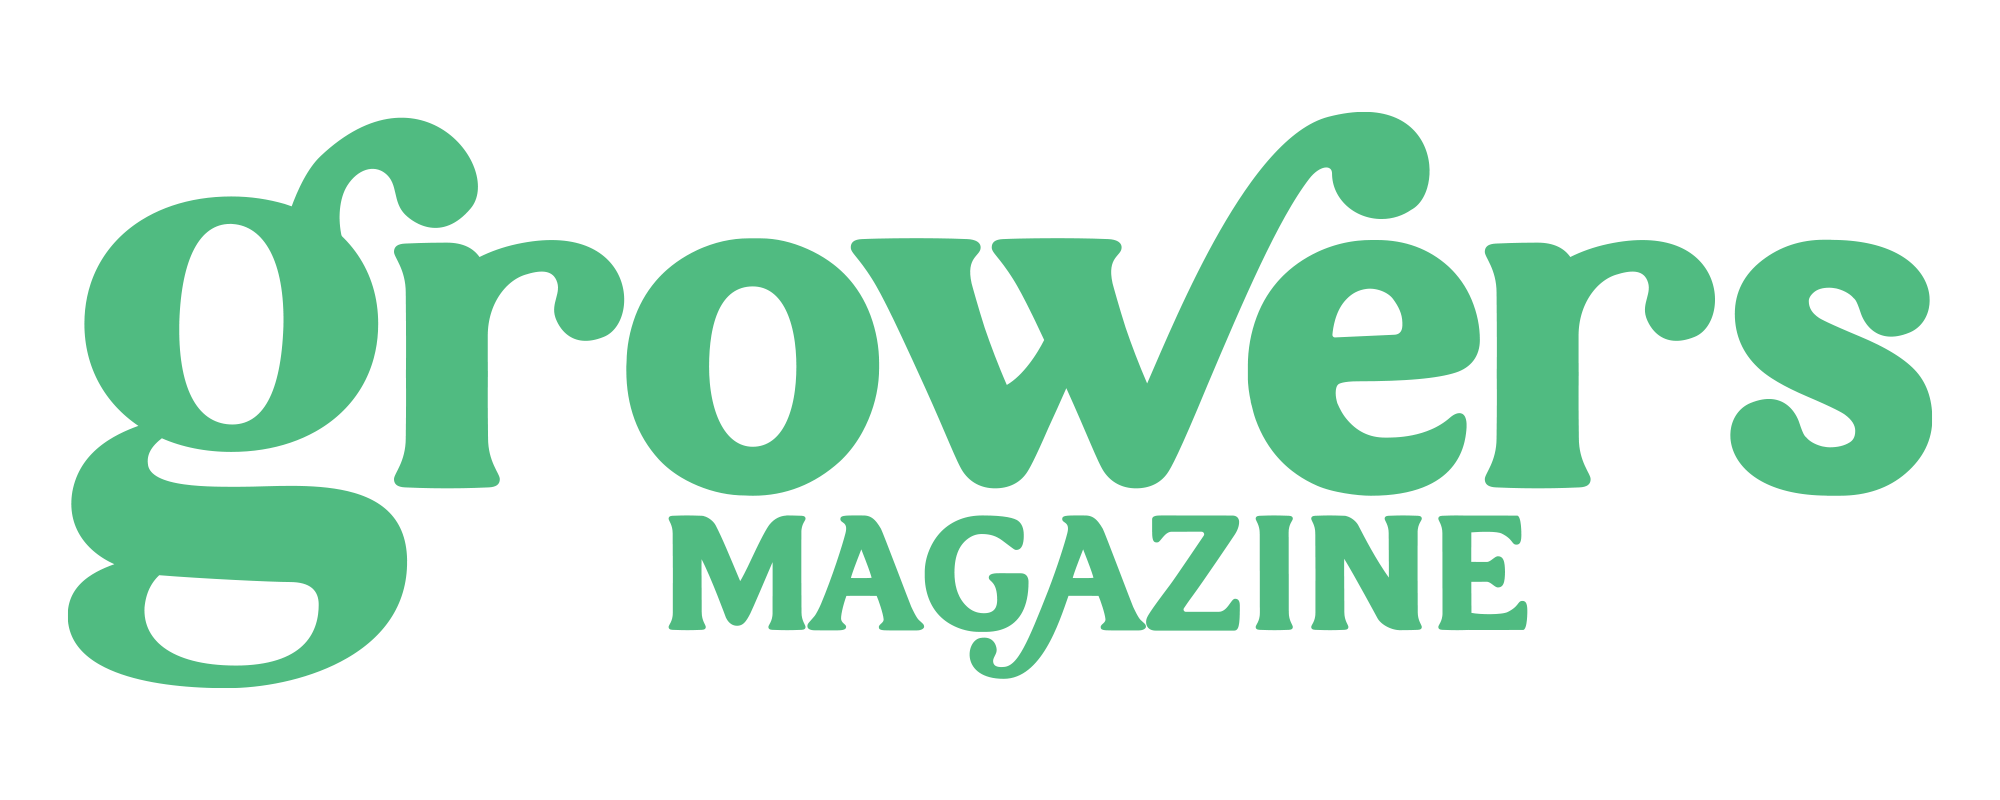 Growers Magazine